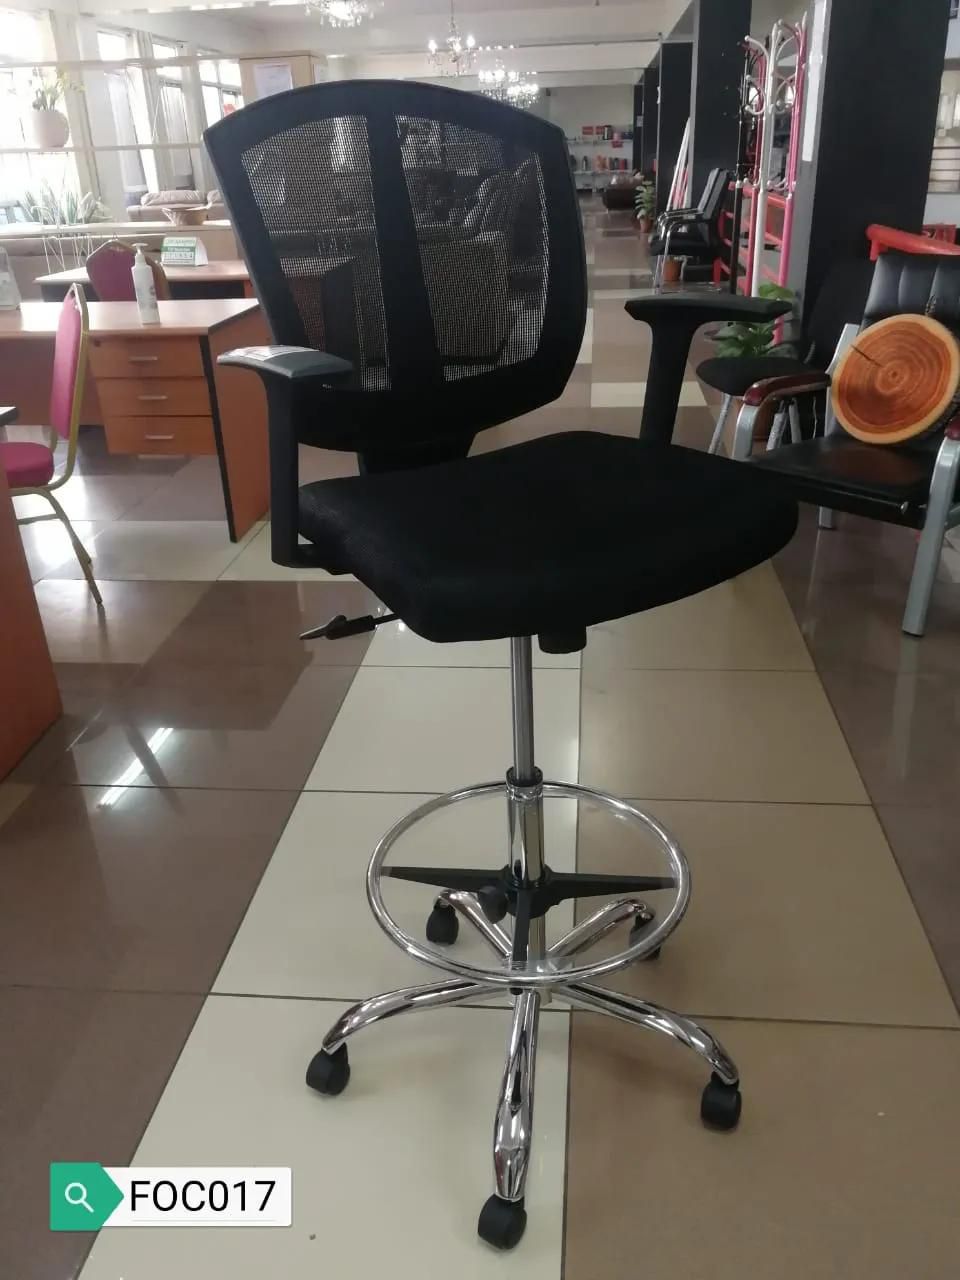 Classy Office Chair - Ergonomic